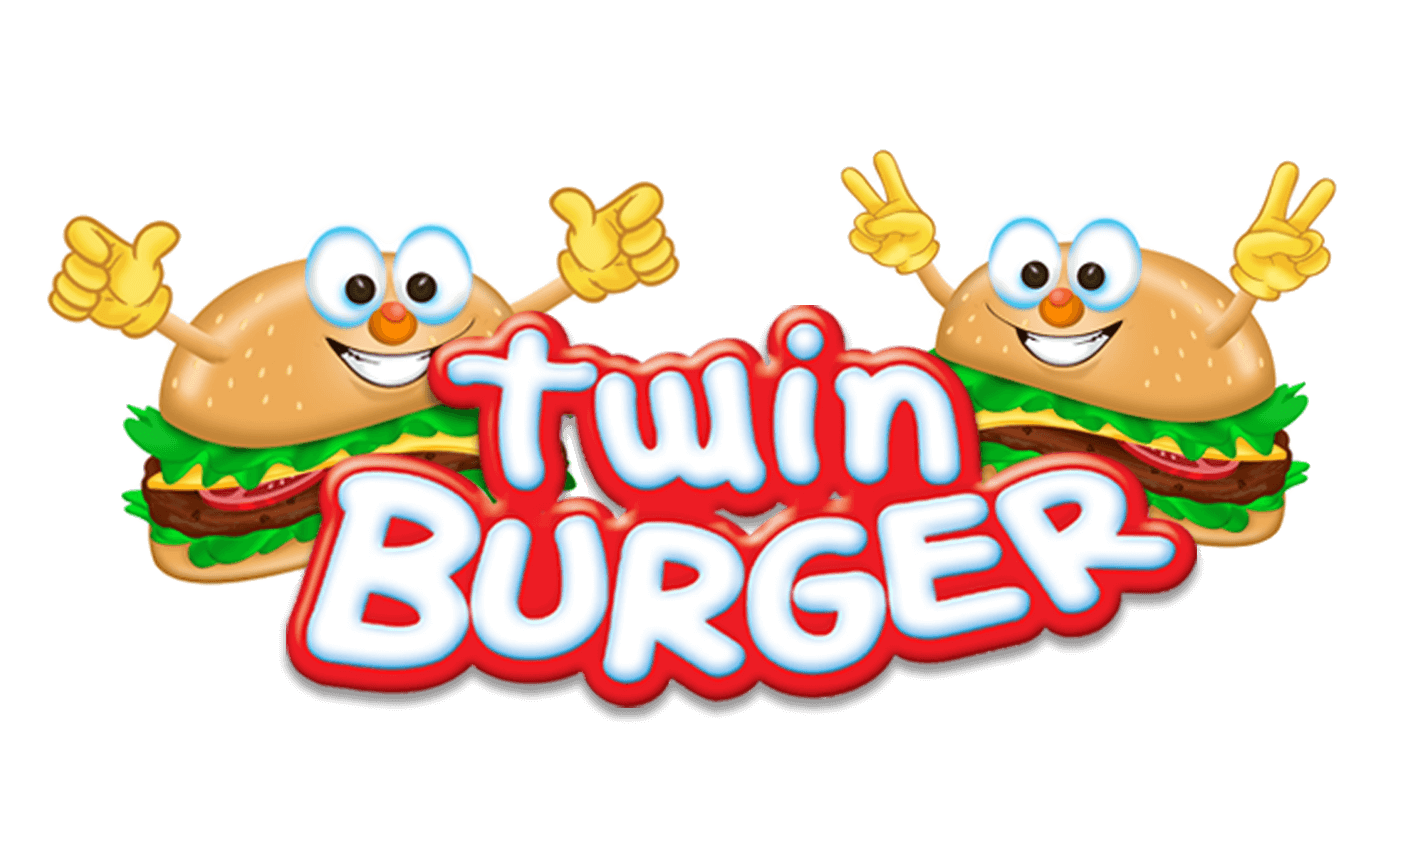 Twin Burger